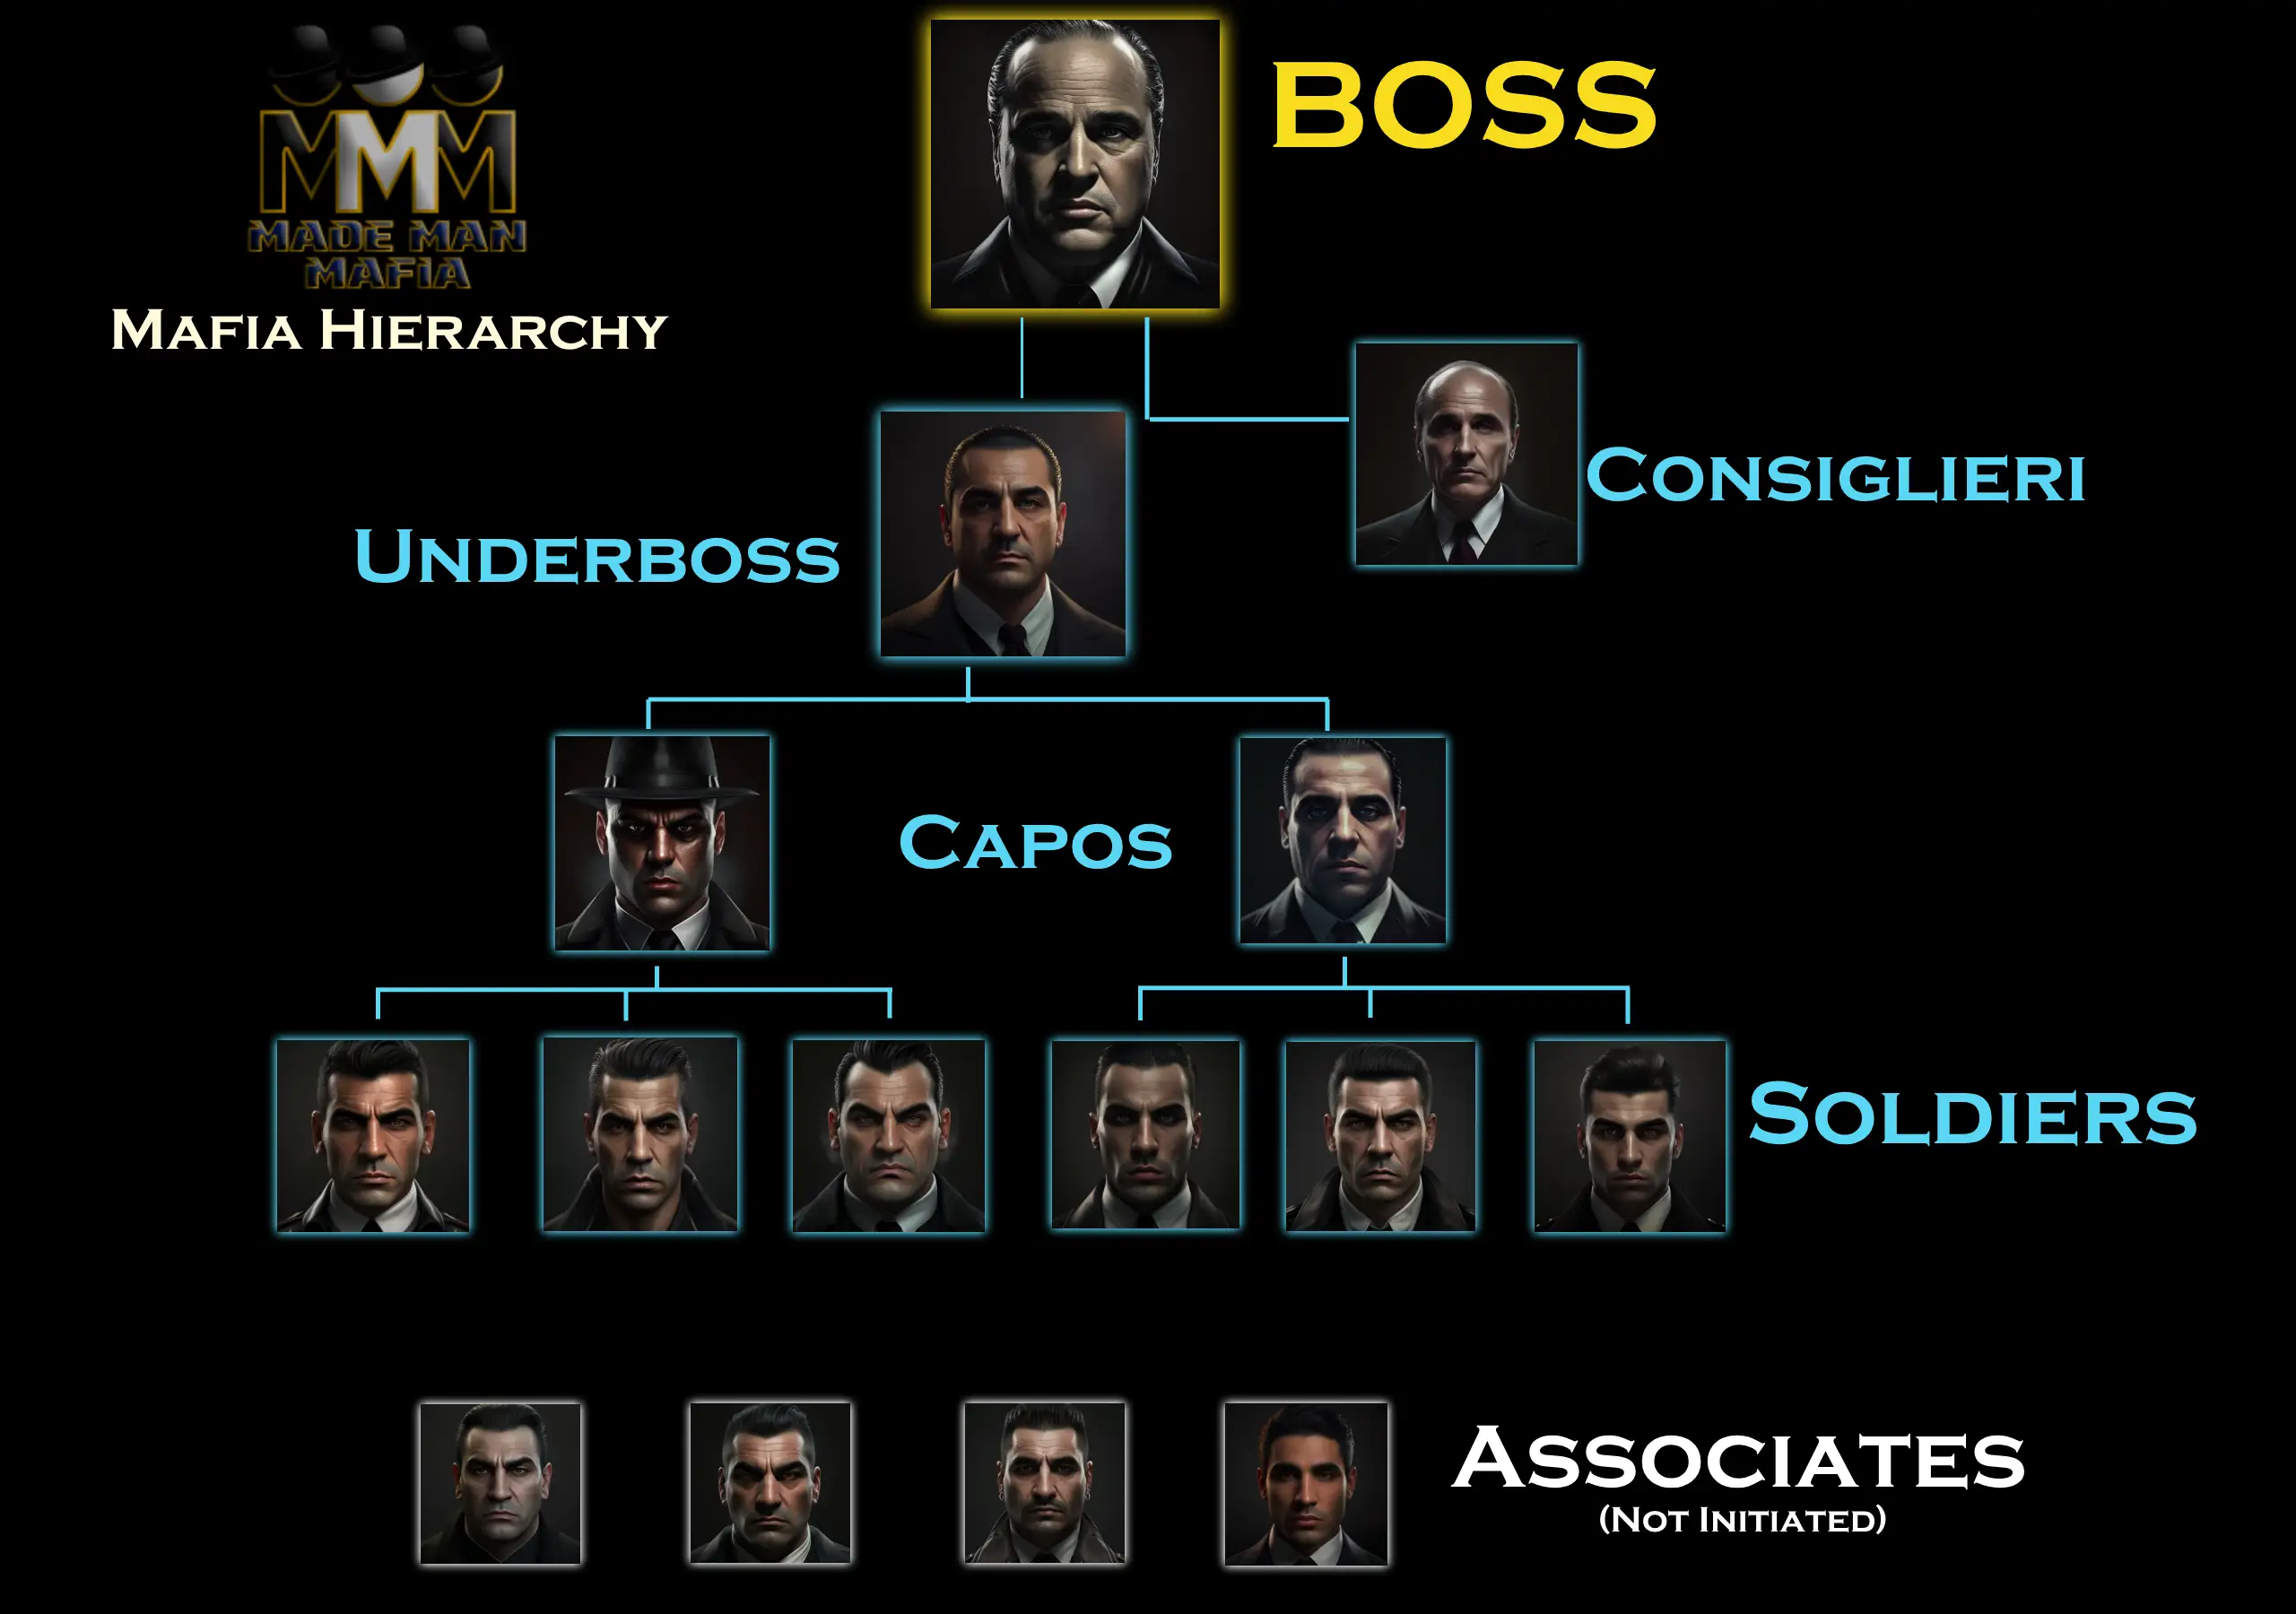 Graphical representation of the Organization and hierarchy of the Mafia, Mafia ranks, and associates of the Mafia.